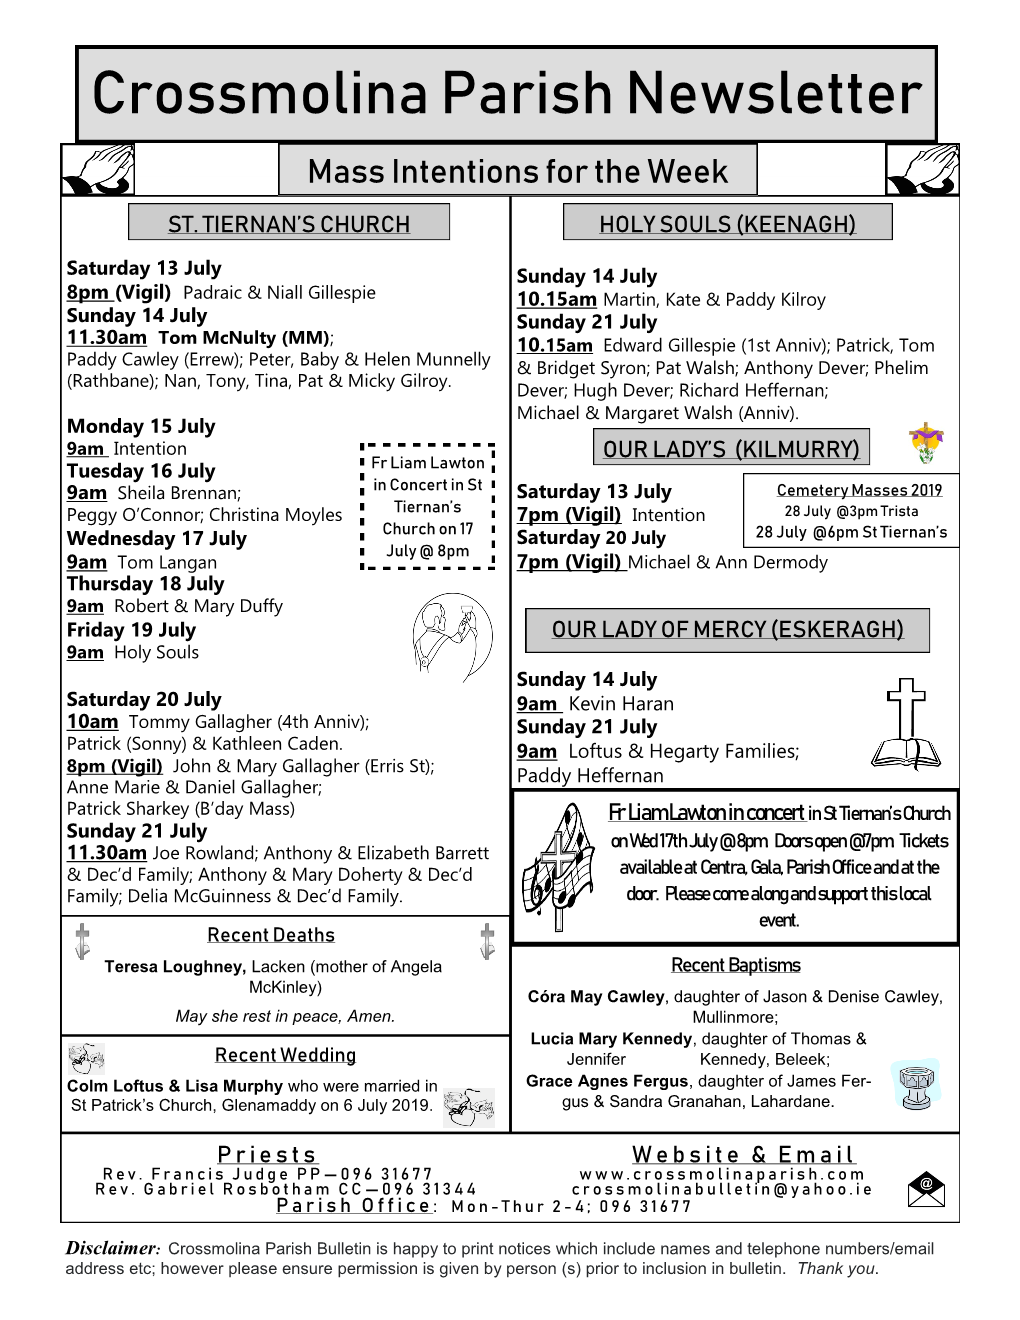 Crossmolina Parish Newsletter Mass Intentions for the Week